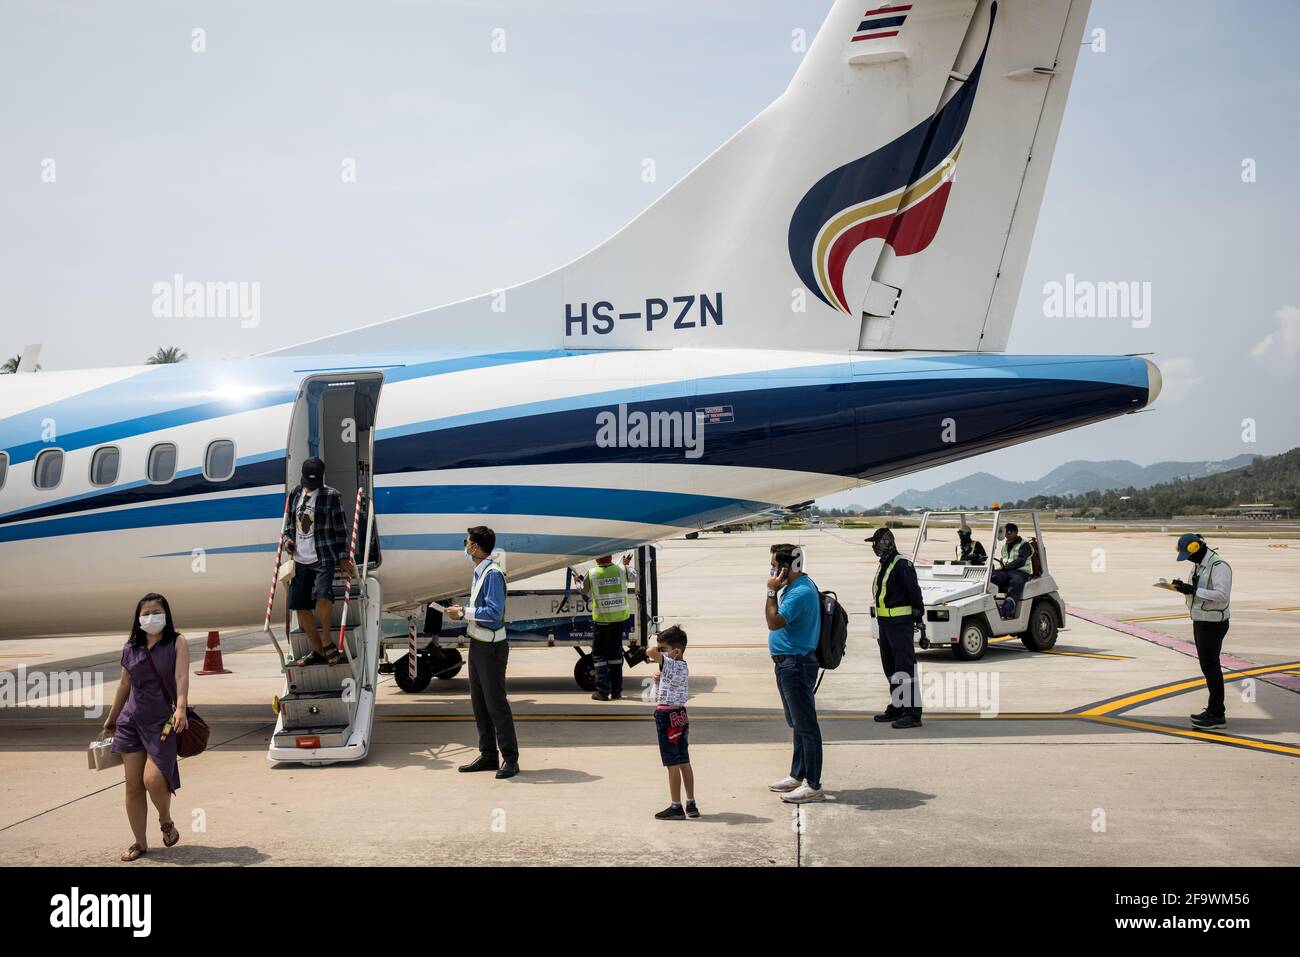 Passengers disembark a Bangkok Airways ATR 72-600 aircraft at Koh Samui airport Thailand on March 8, 2021 during the global covid-19 pandemic. Stock Photo